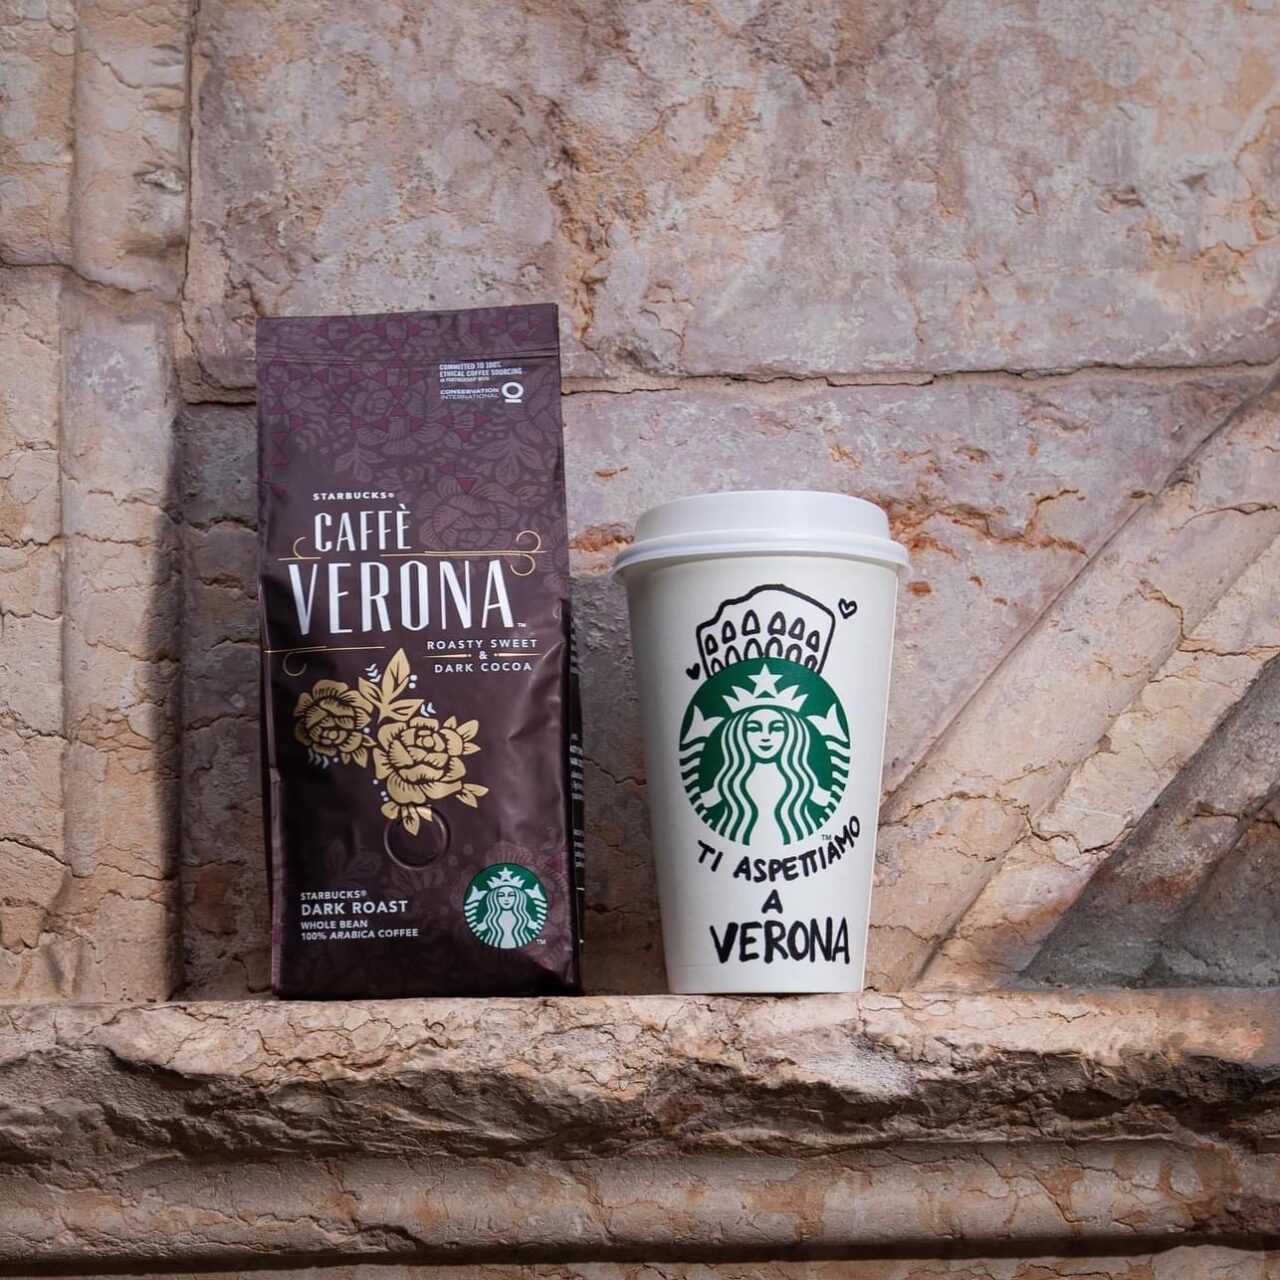 Il caffè Verona di Starbucks